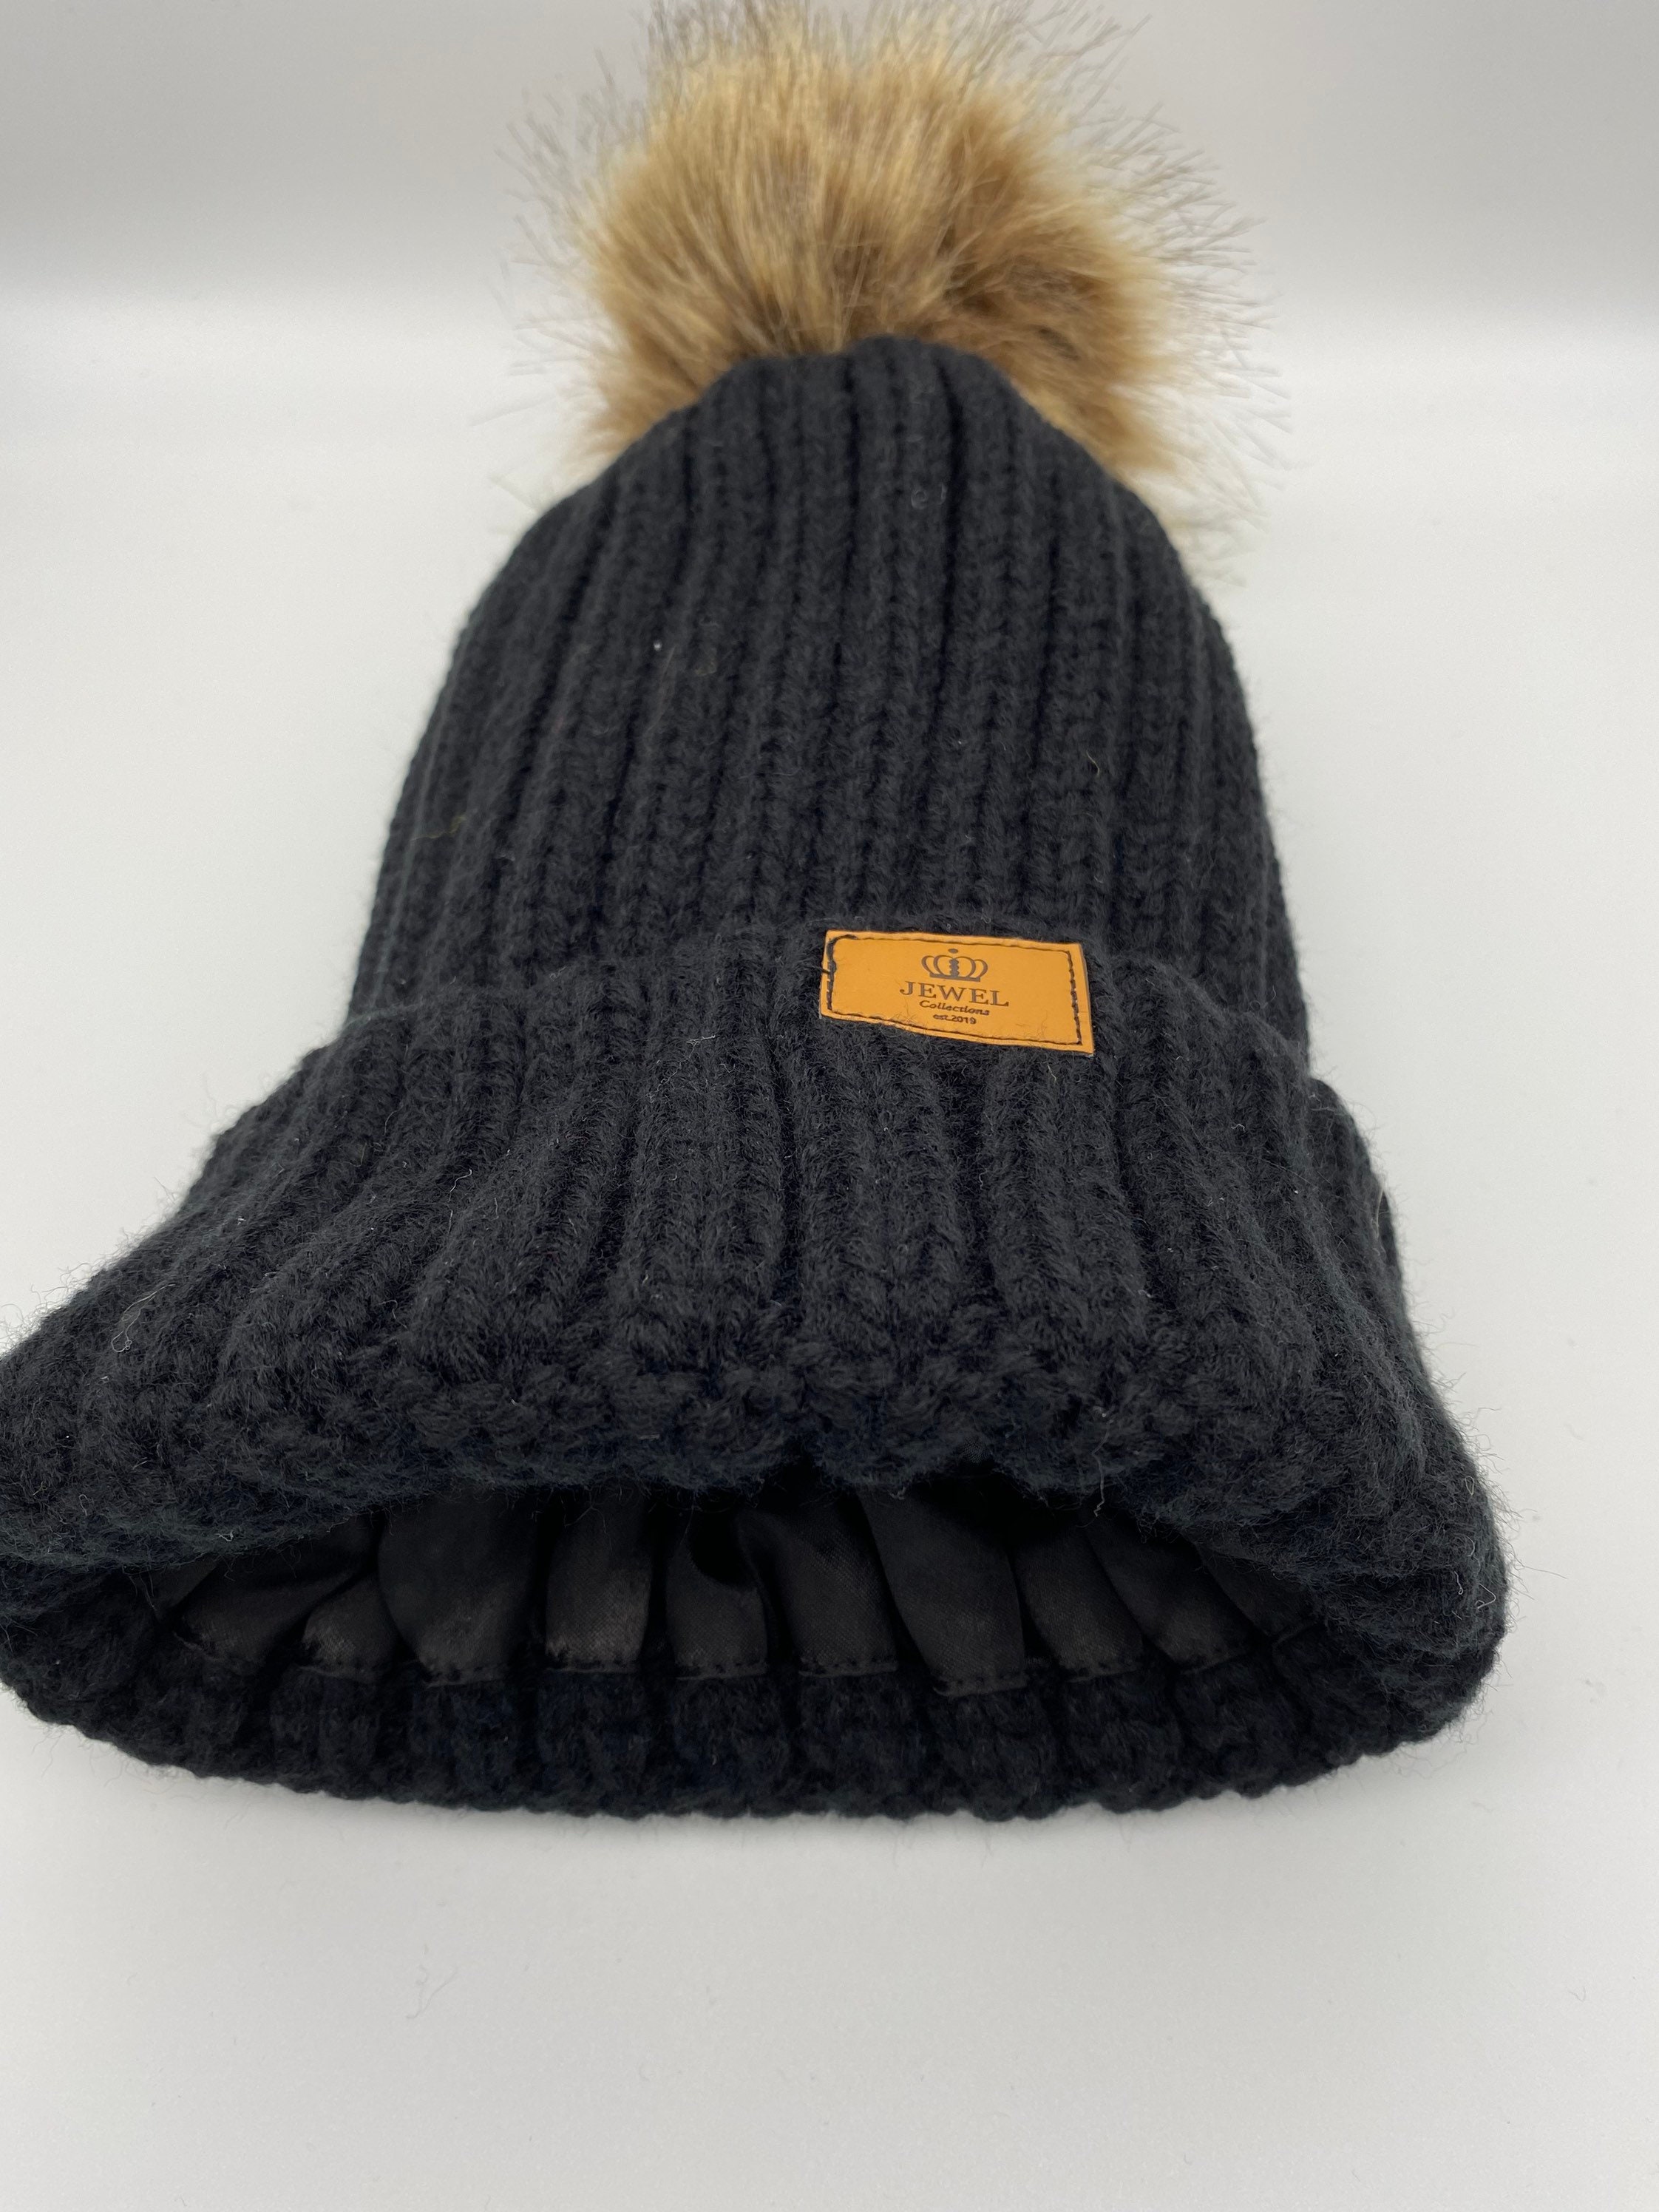 Satin Lined Winter Hats | Etsy